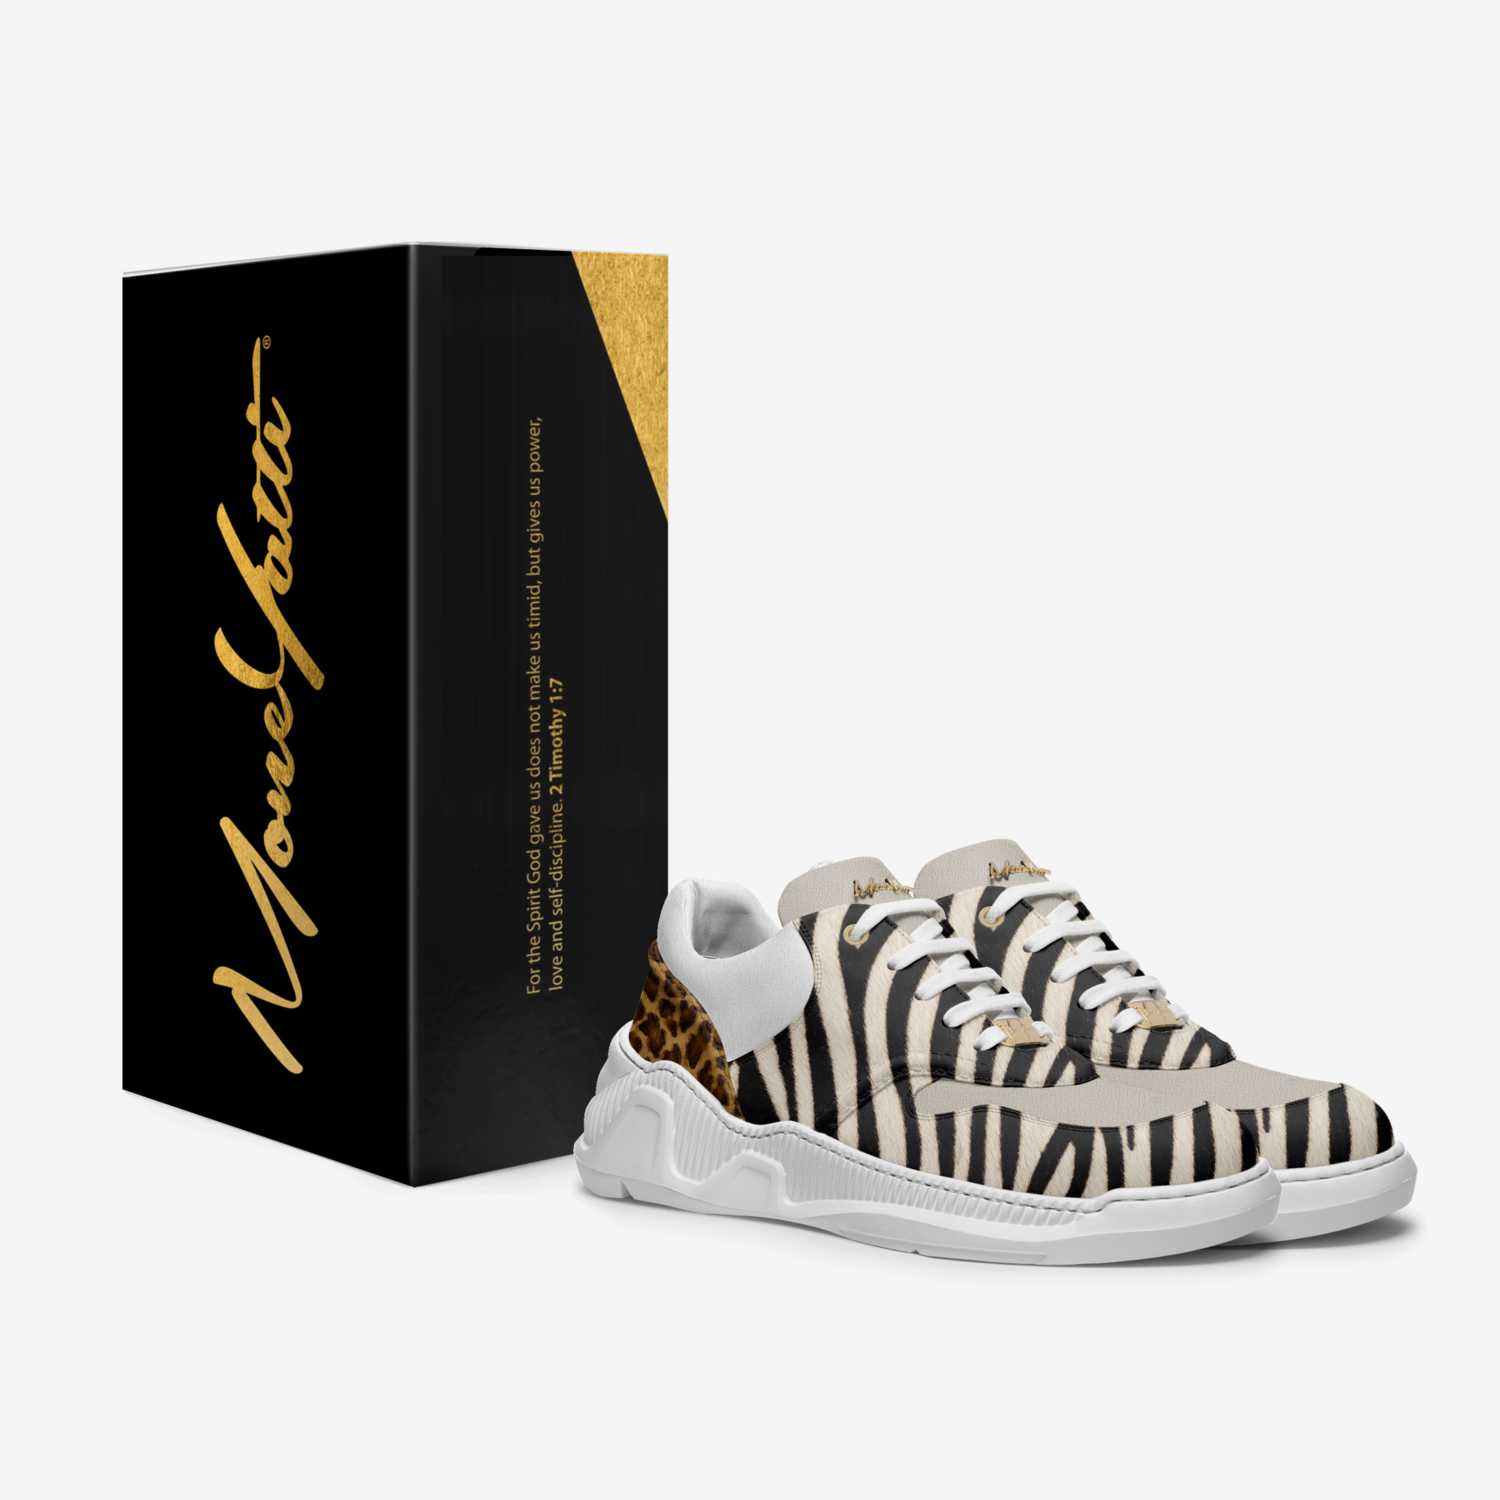 Moneyatti Miller02 custom made in Italy shoes by Moneyatti Brand | Box view